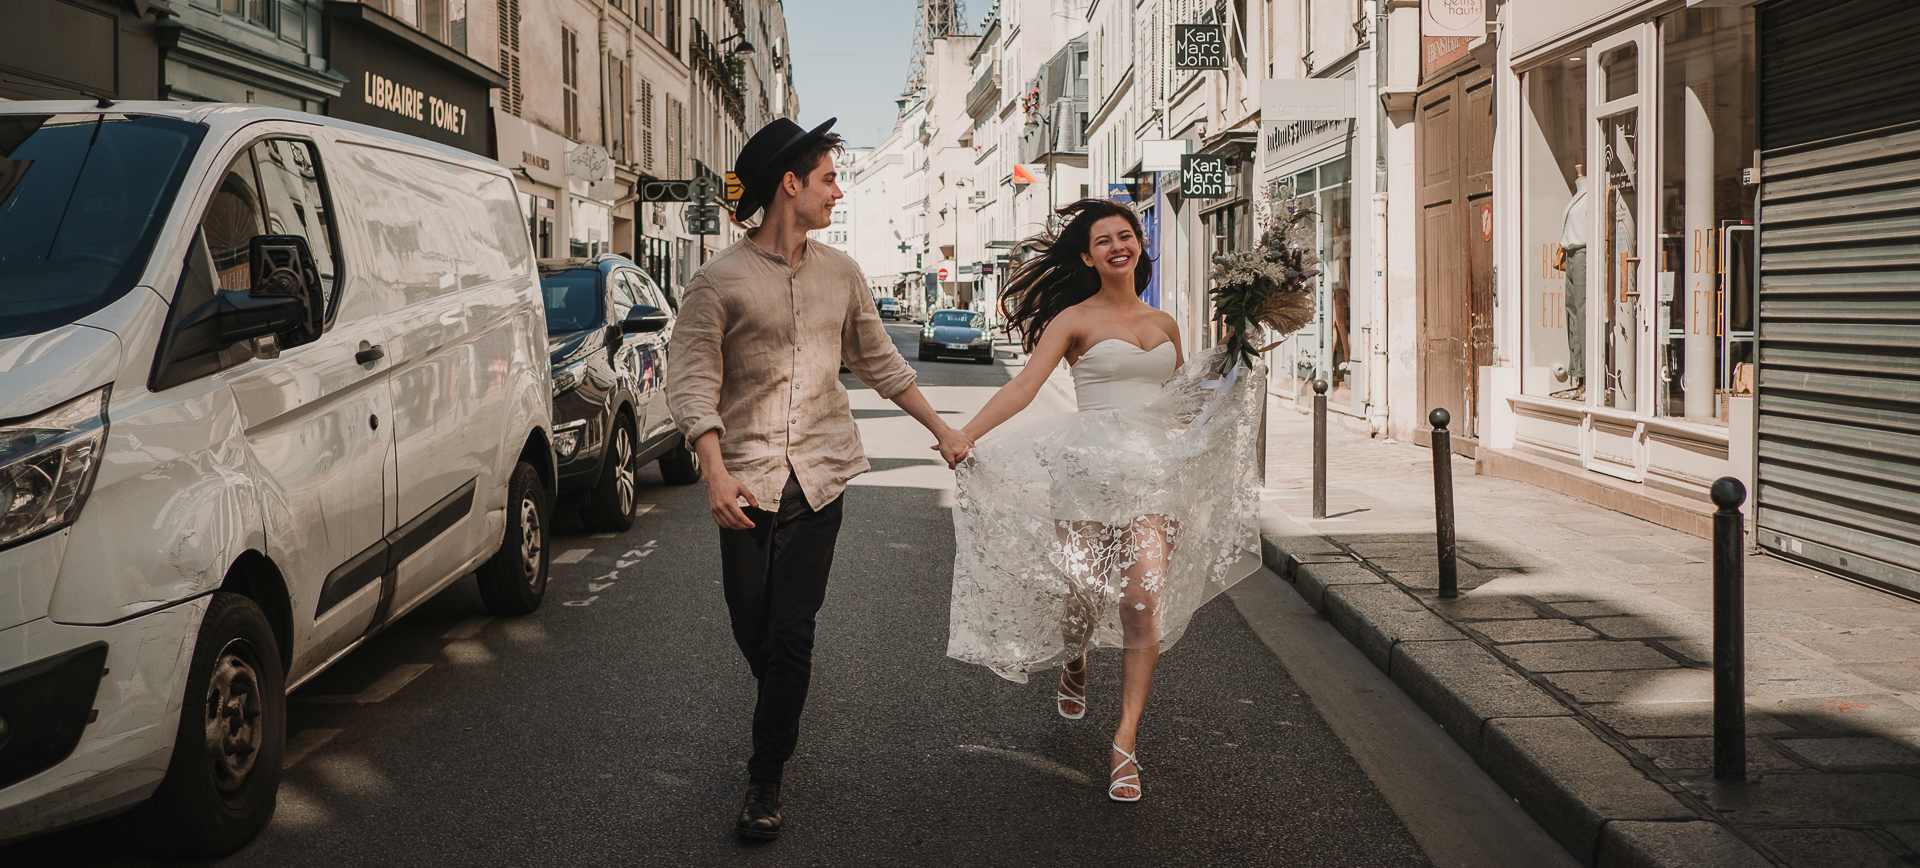 paris wedding photoshoot in france